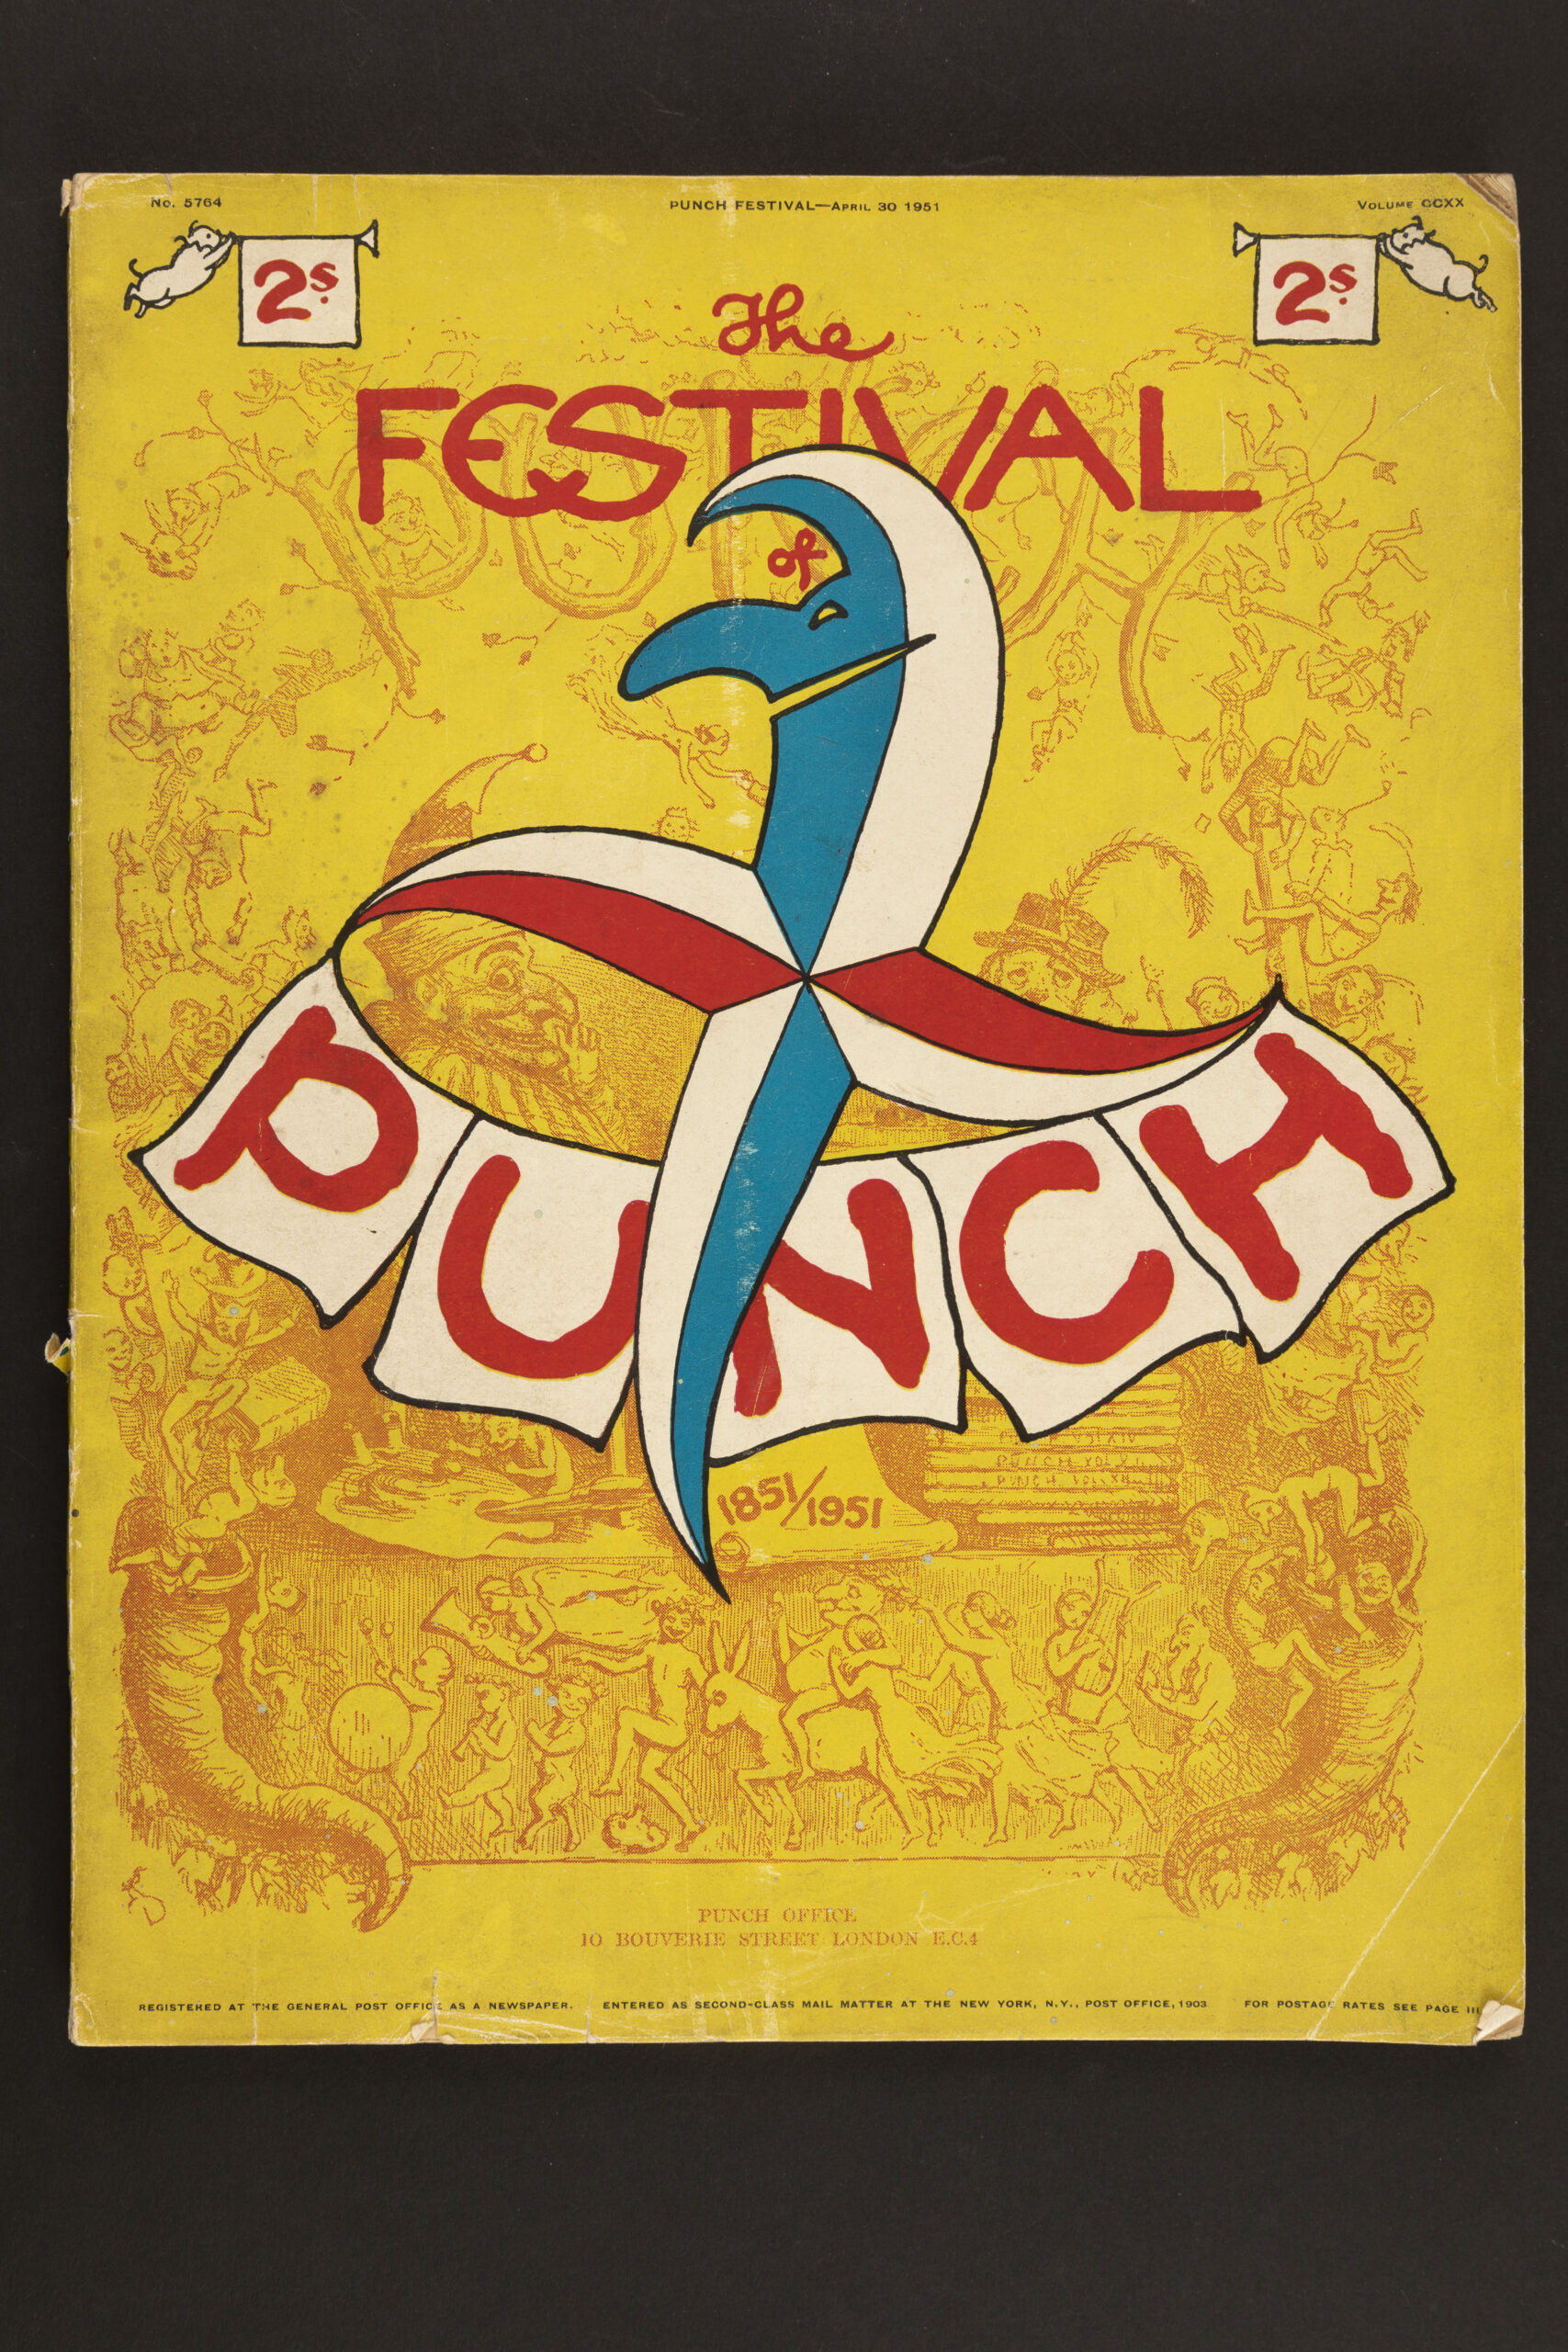 49. Festival of Punch